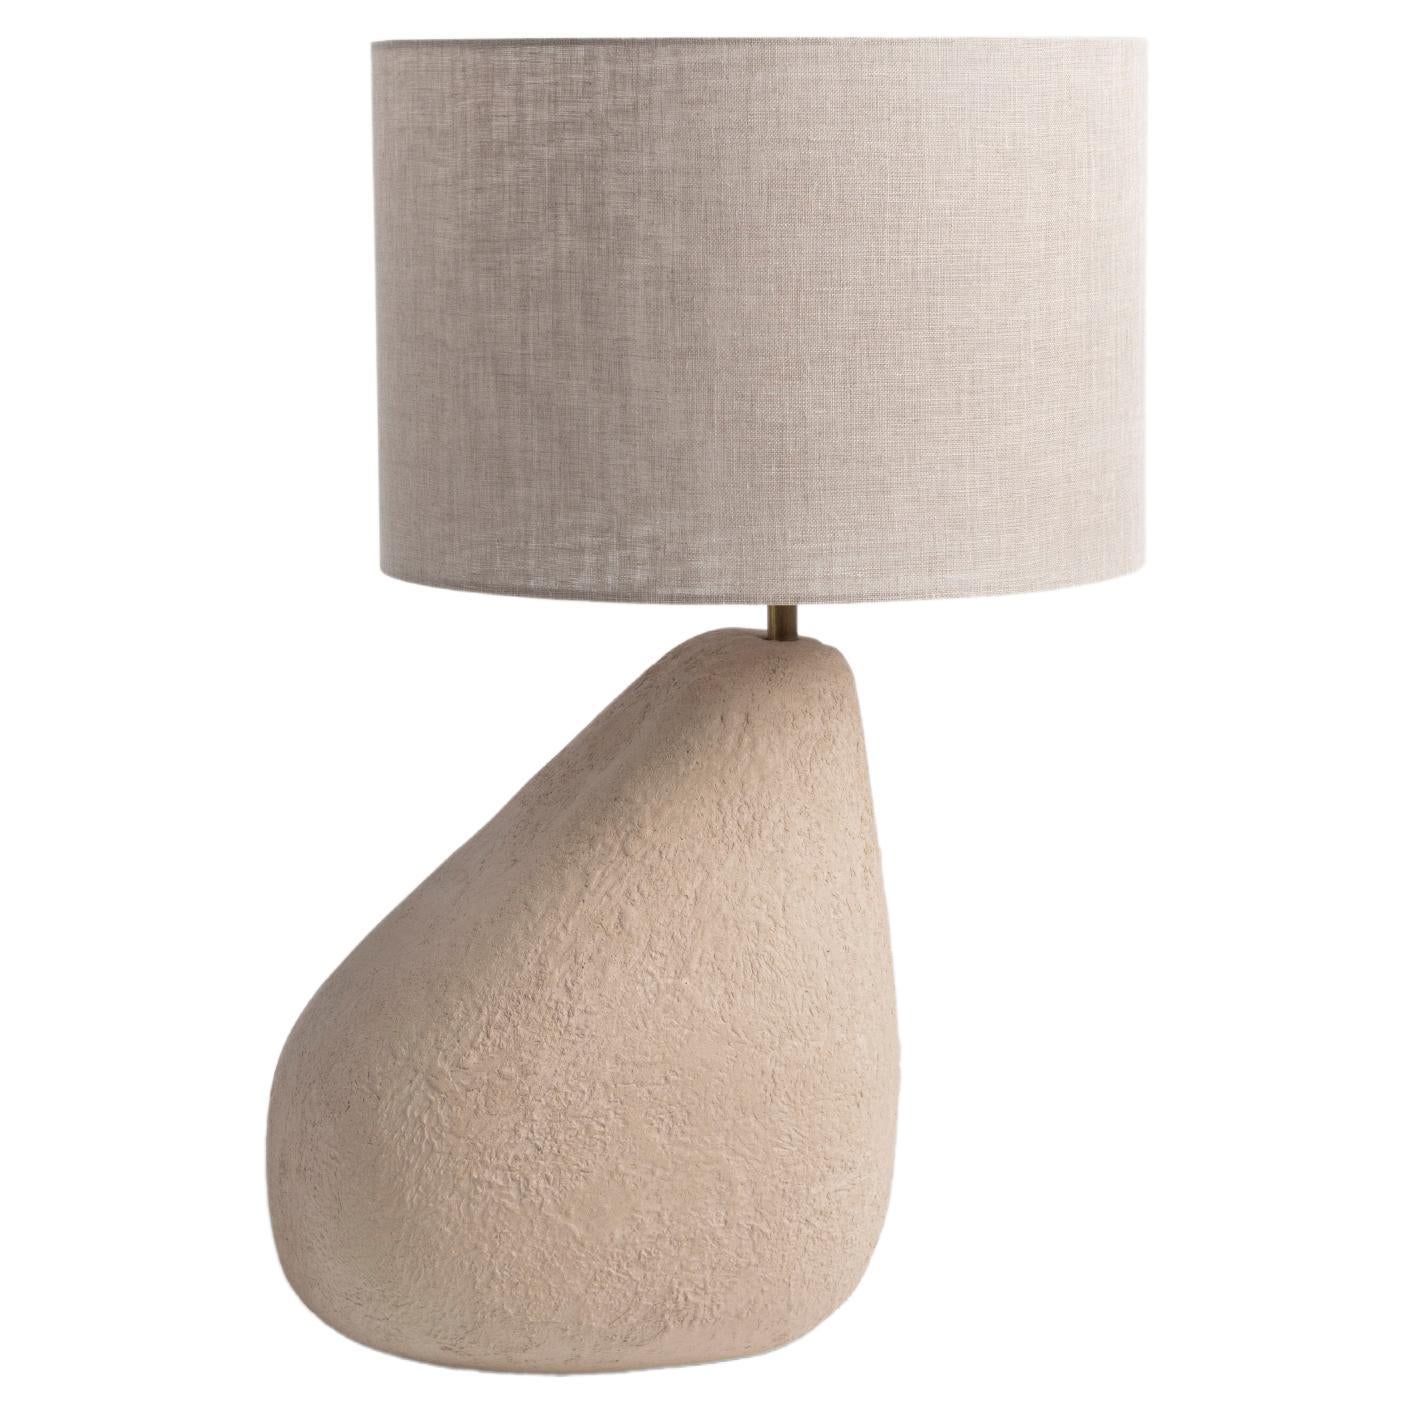 Sinatra Handmade Ceramic Table Lamp